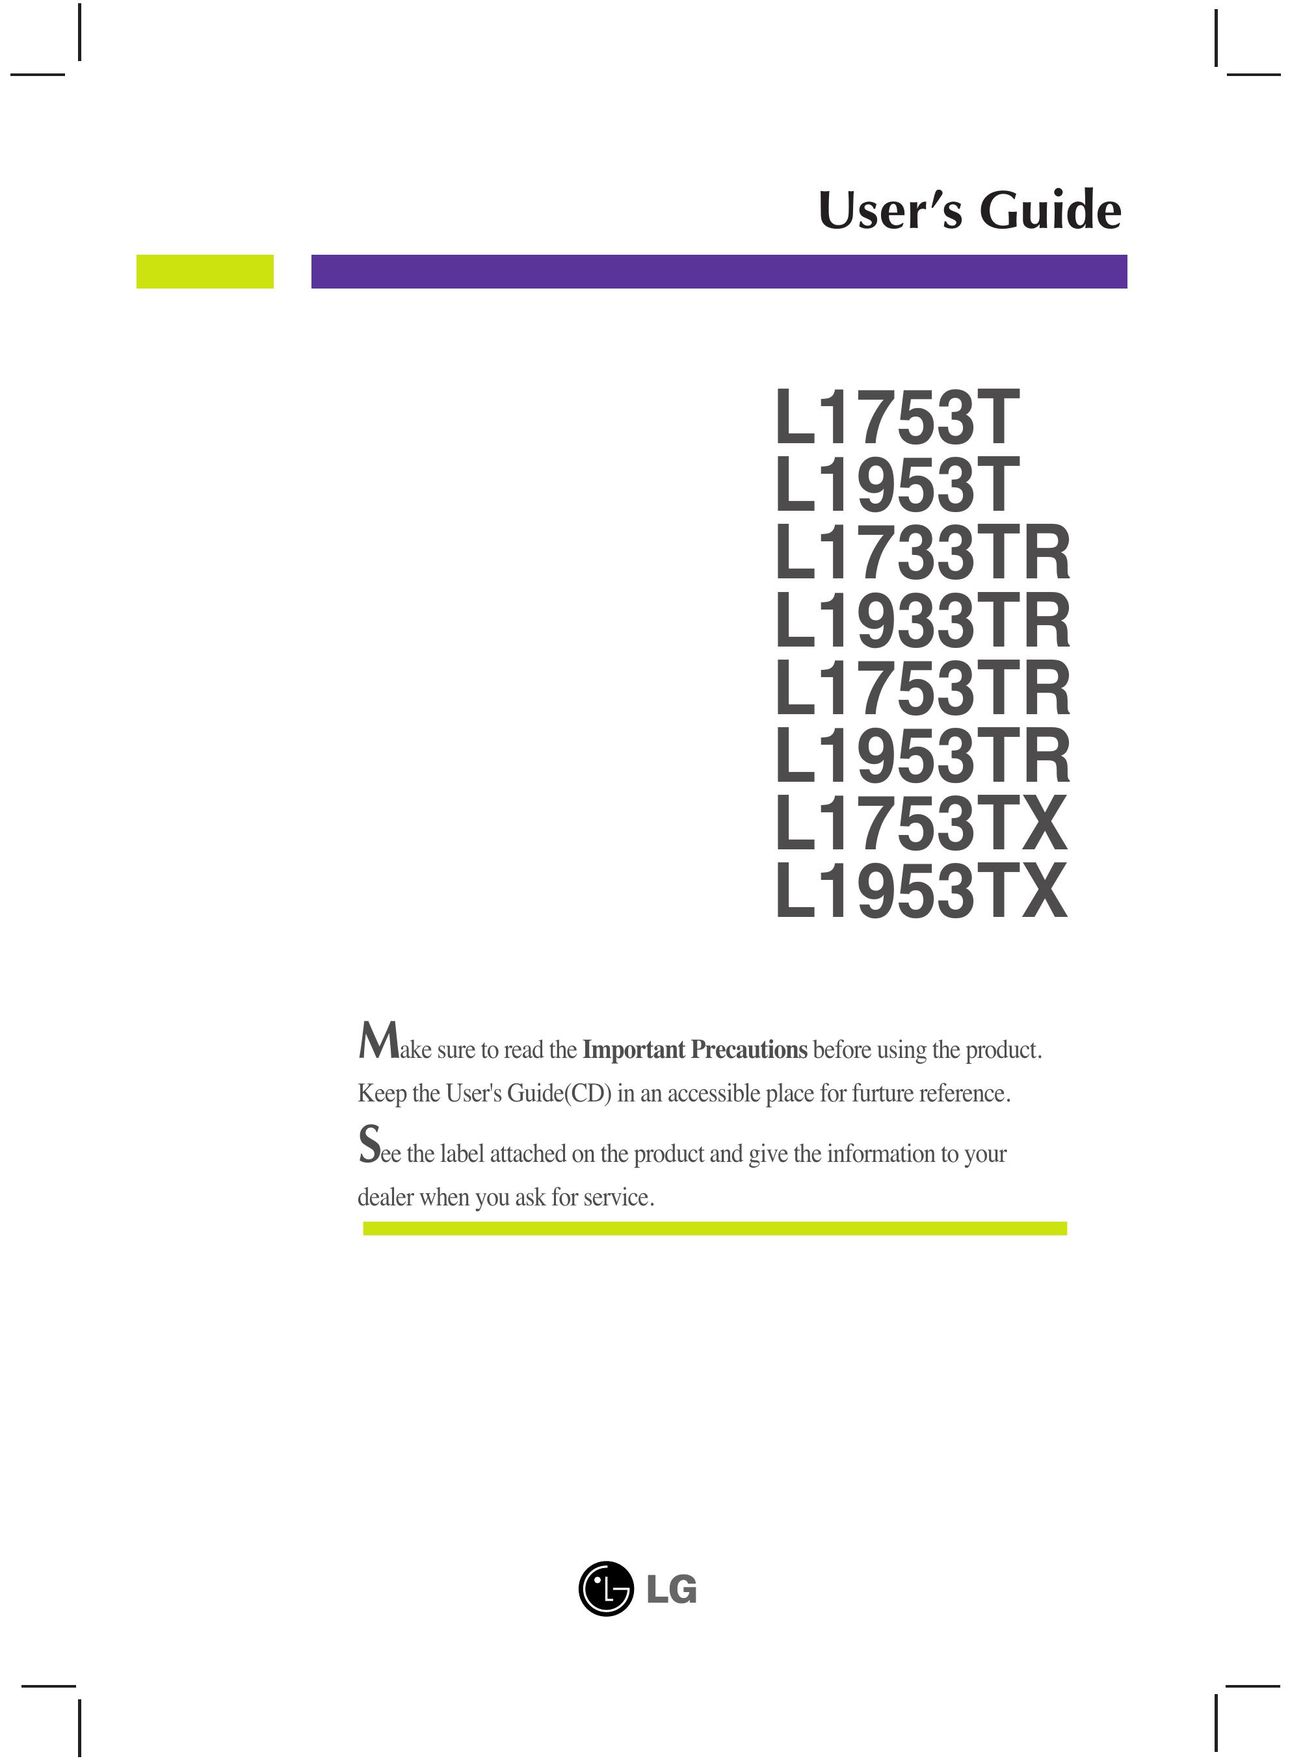 LG Electronics L1753TR CD Player User Manual